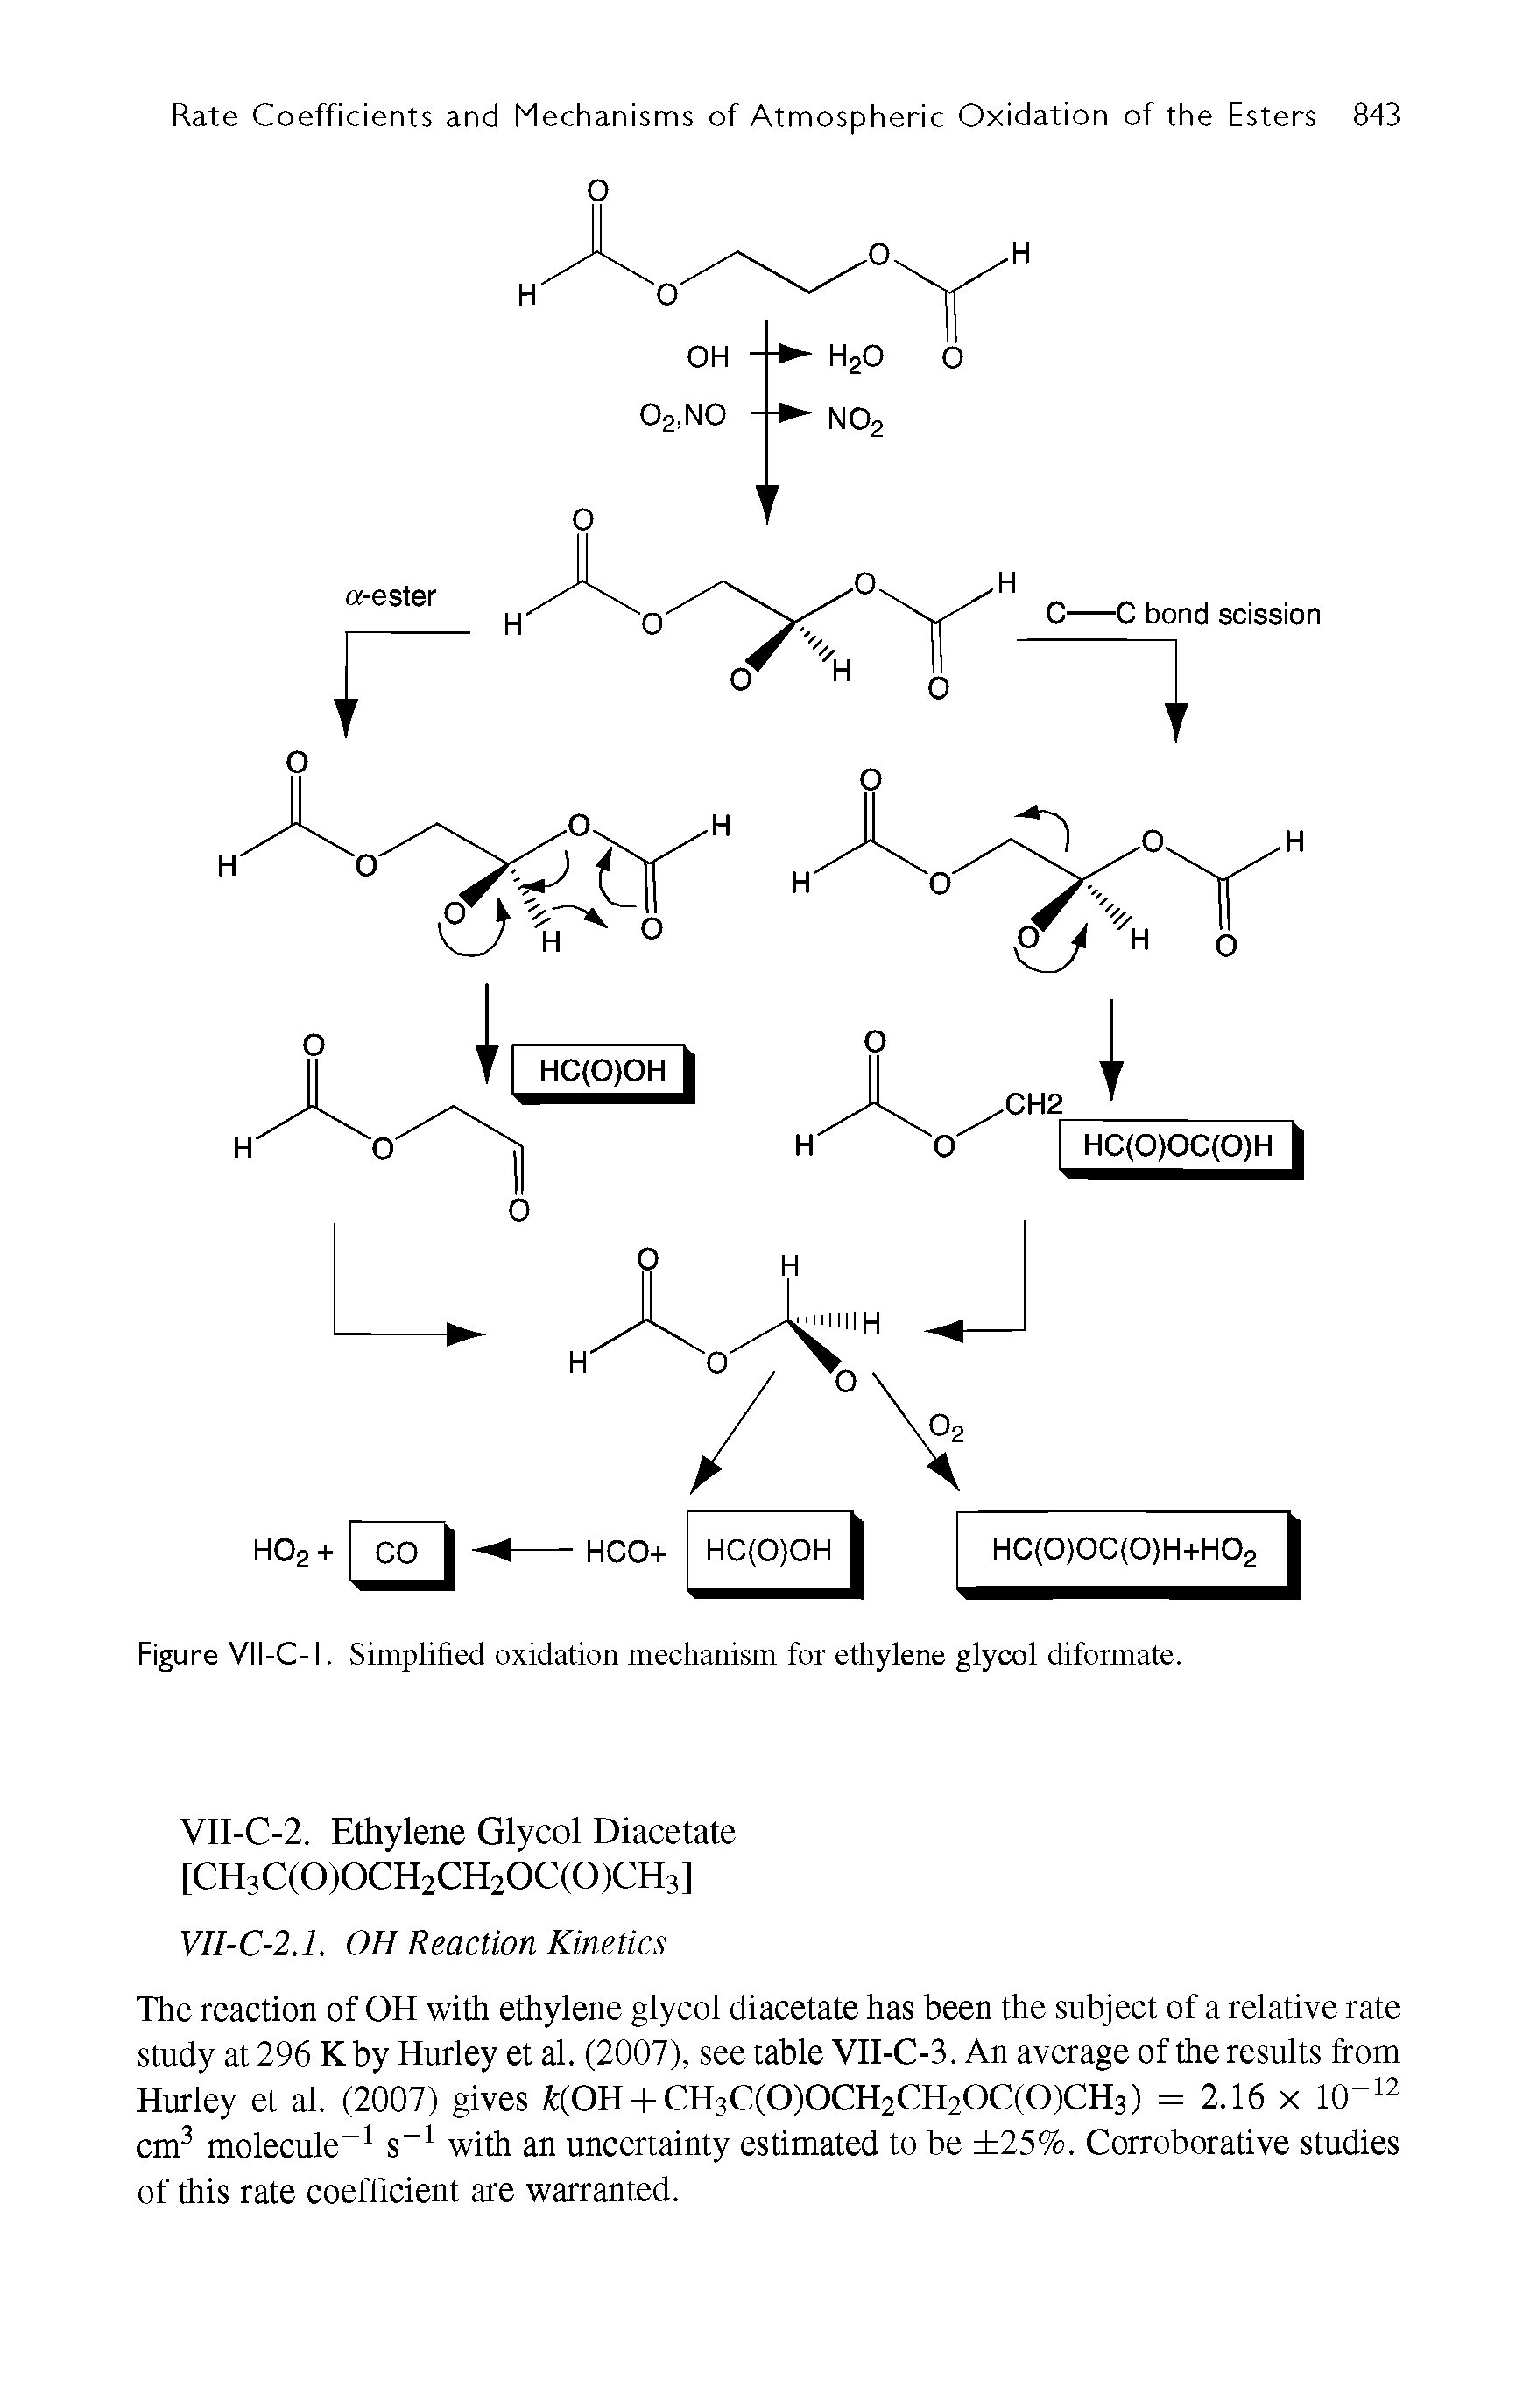 Figure Vll-C-1. Simplified oxidation mechanism for ethylene glycol diformate.